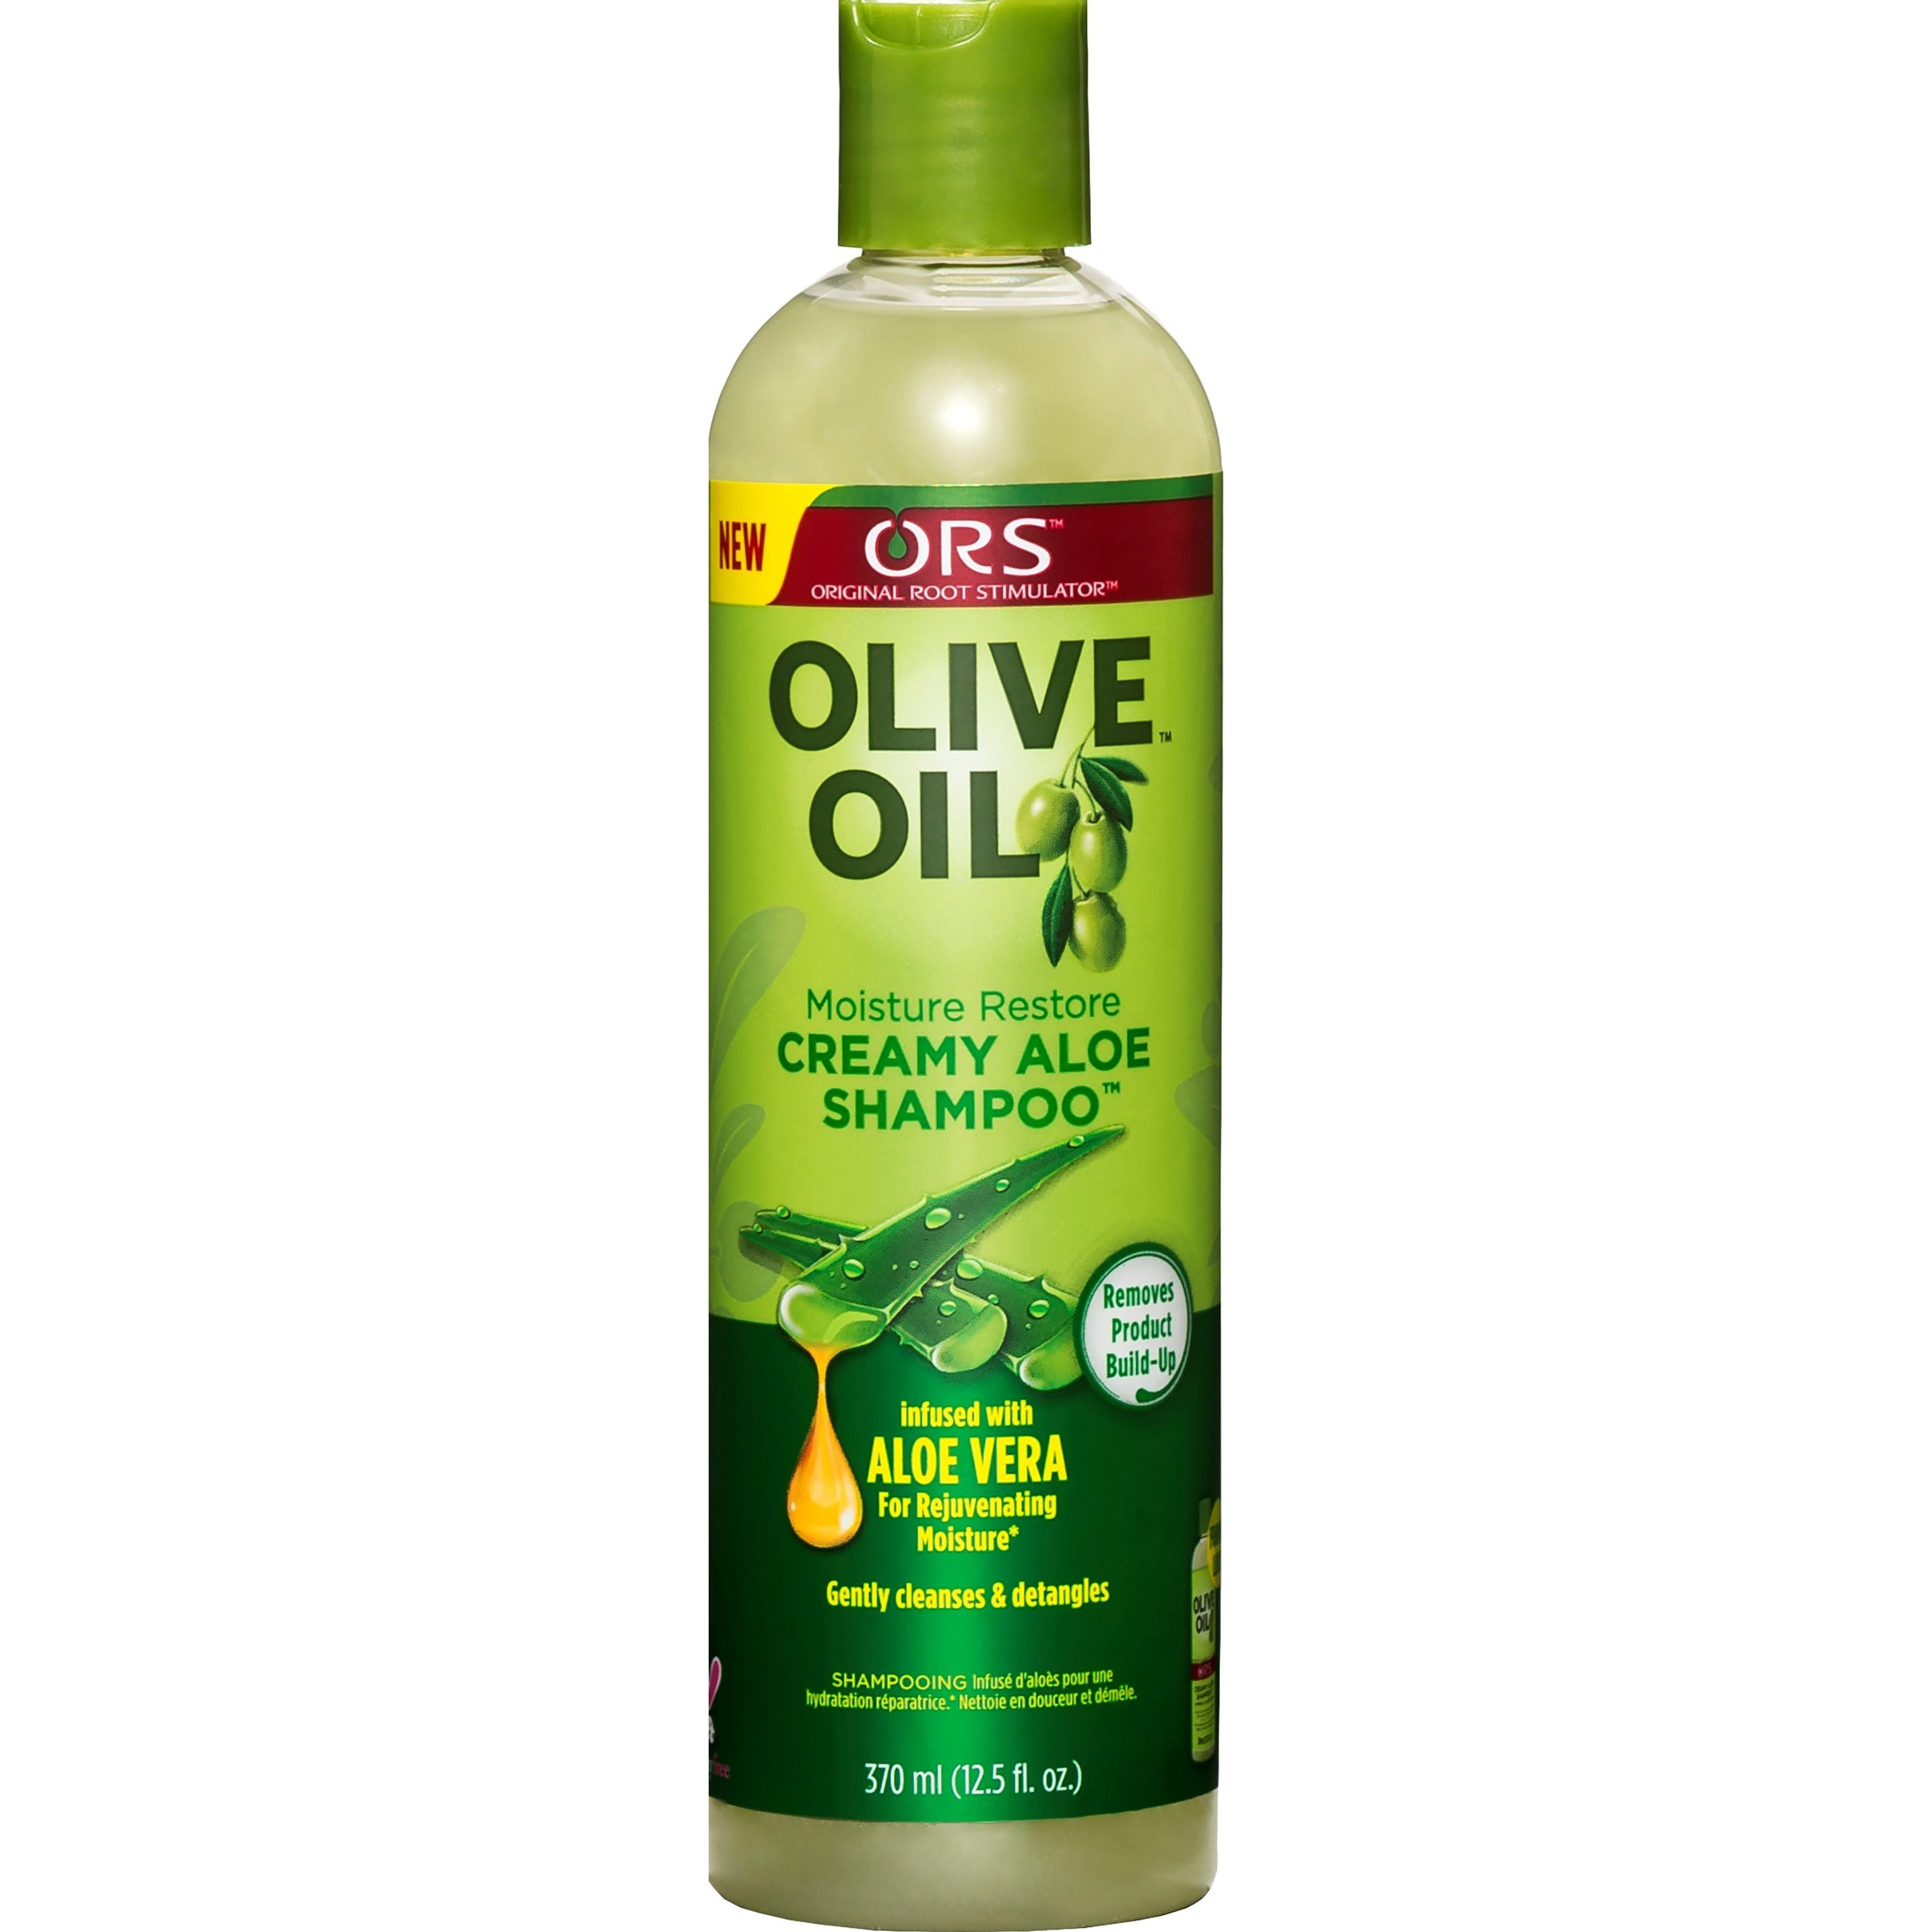 4th Ave Market: ORS Olive Oil Moisture Restore Creamy Aloe Shampoo